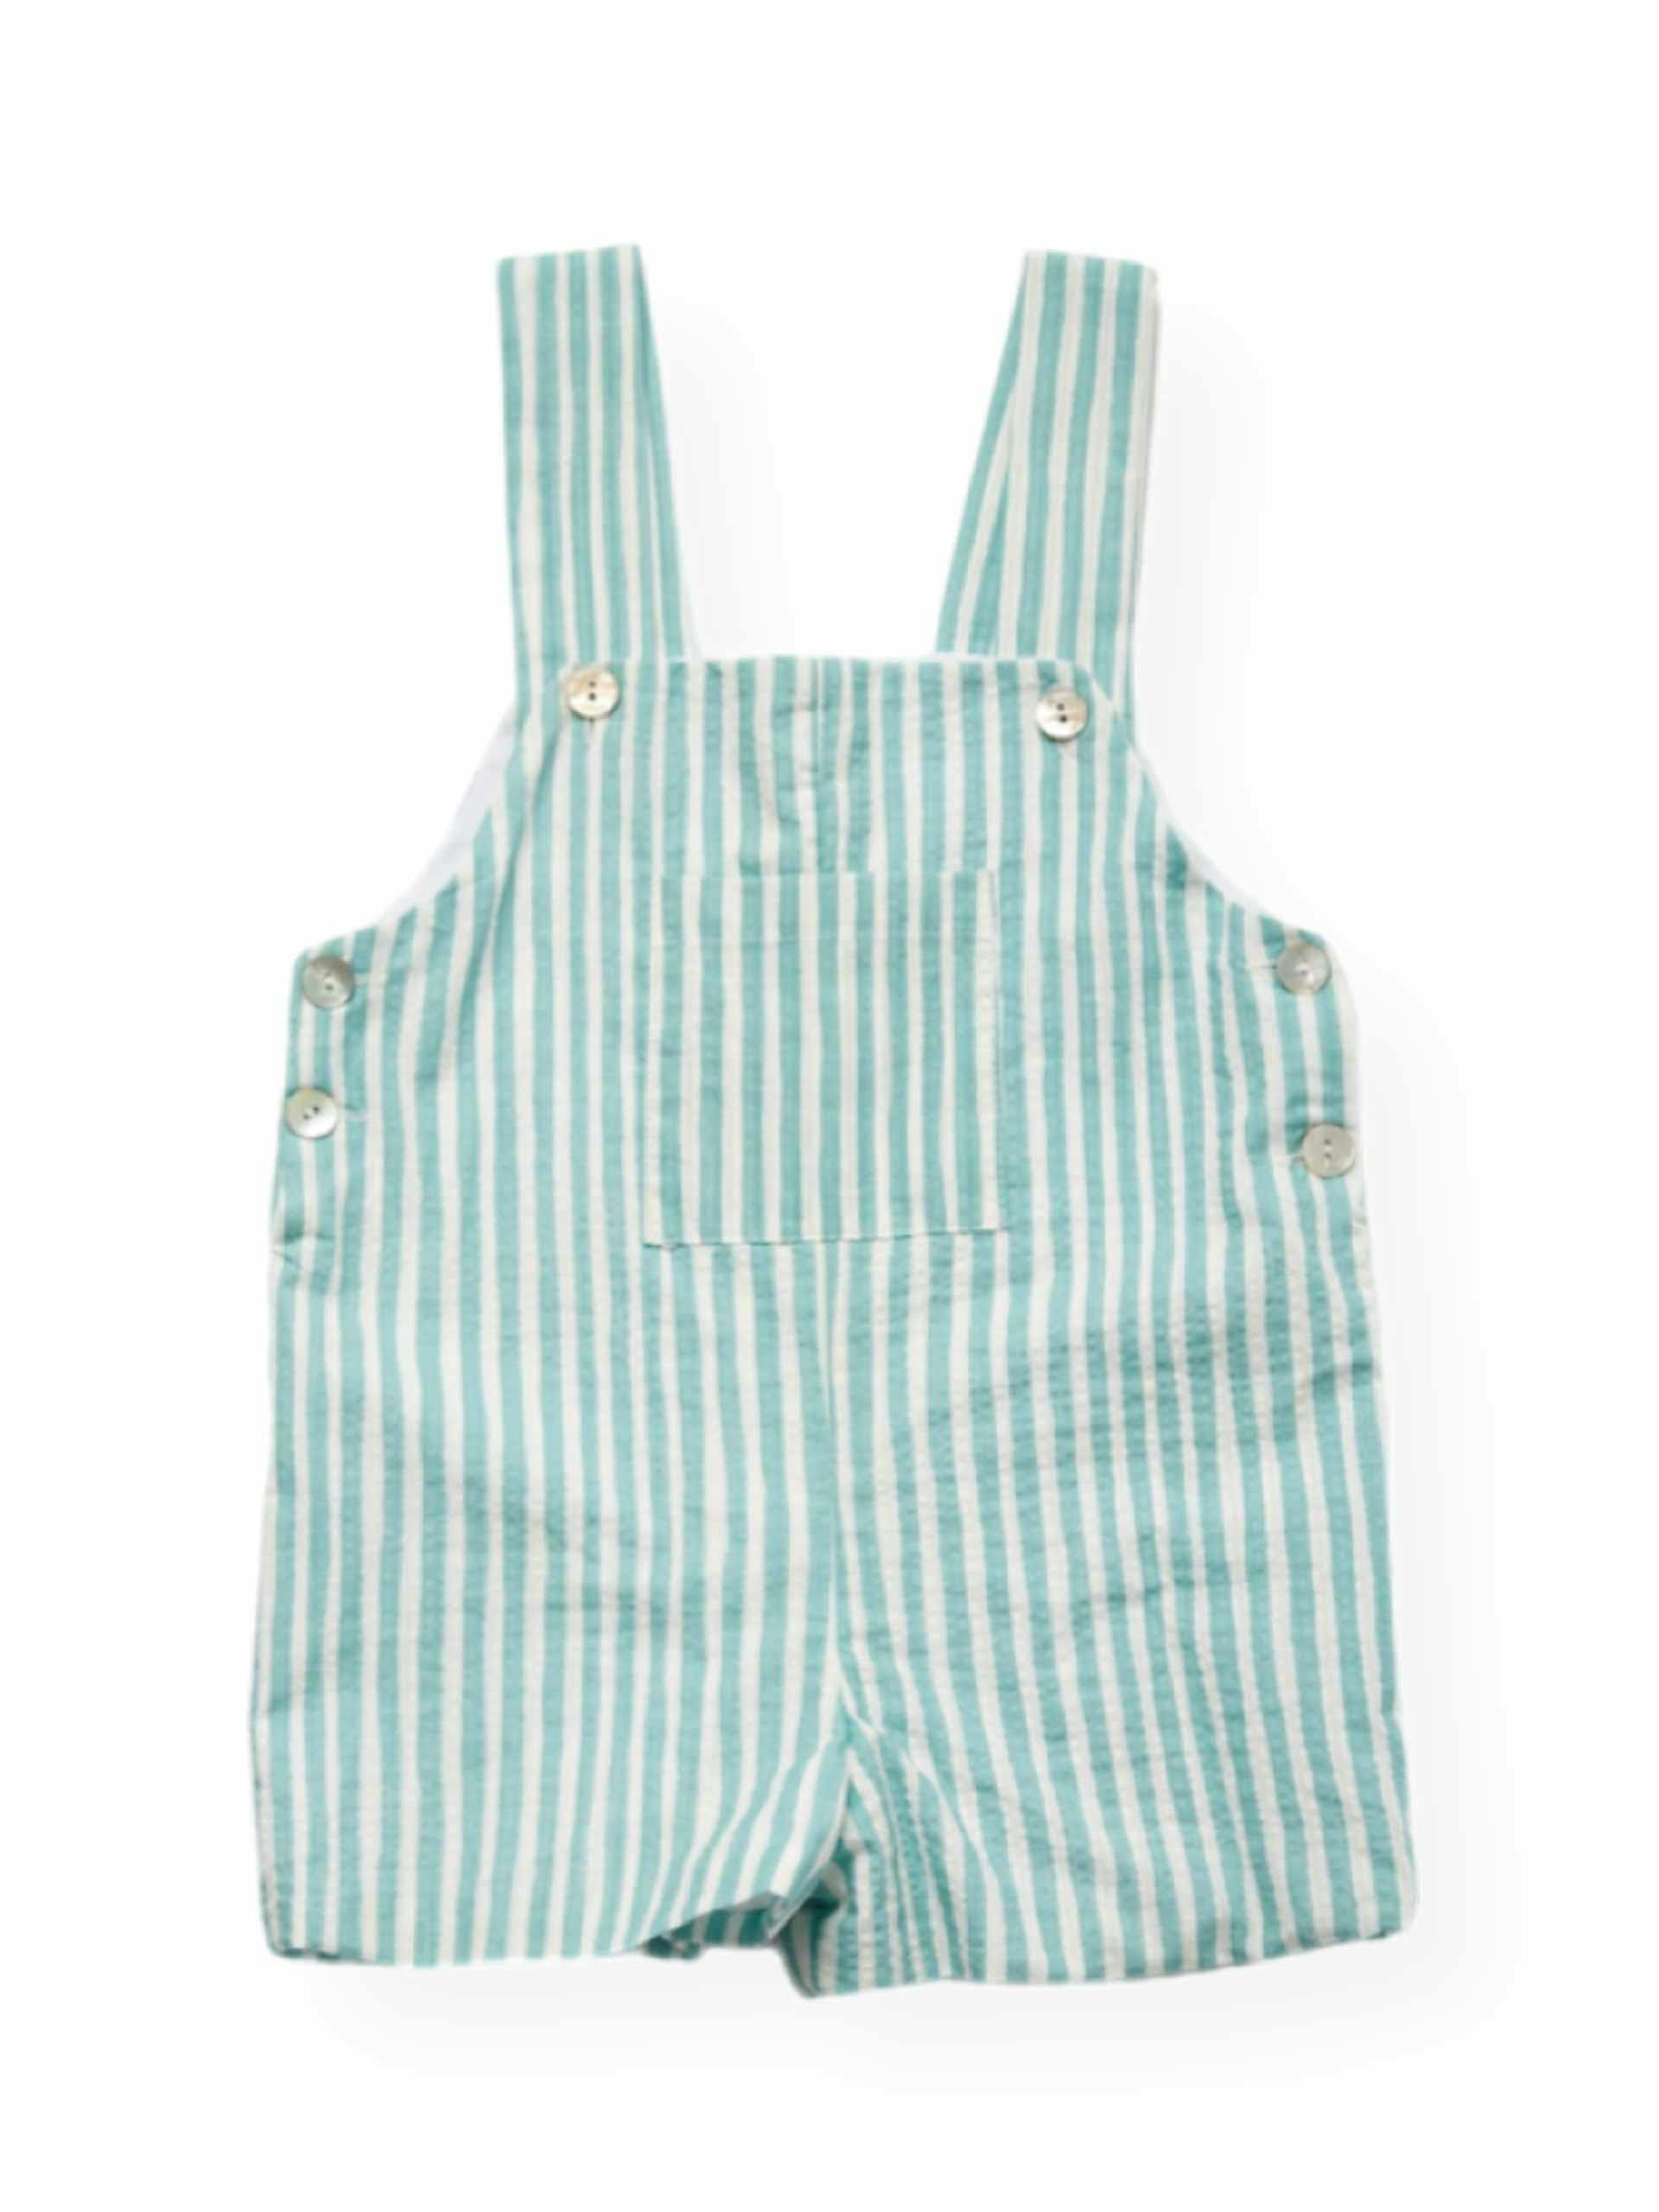 Stripe summer overalls